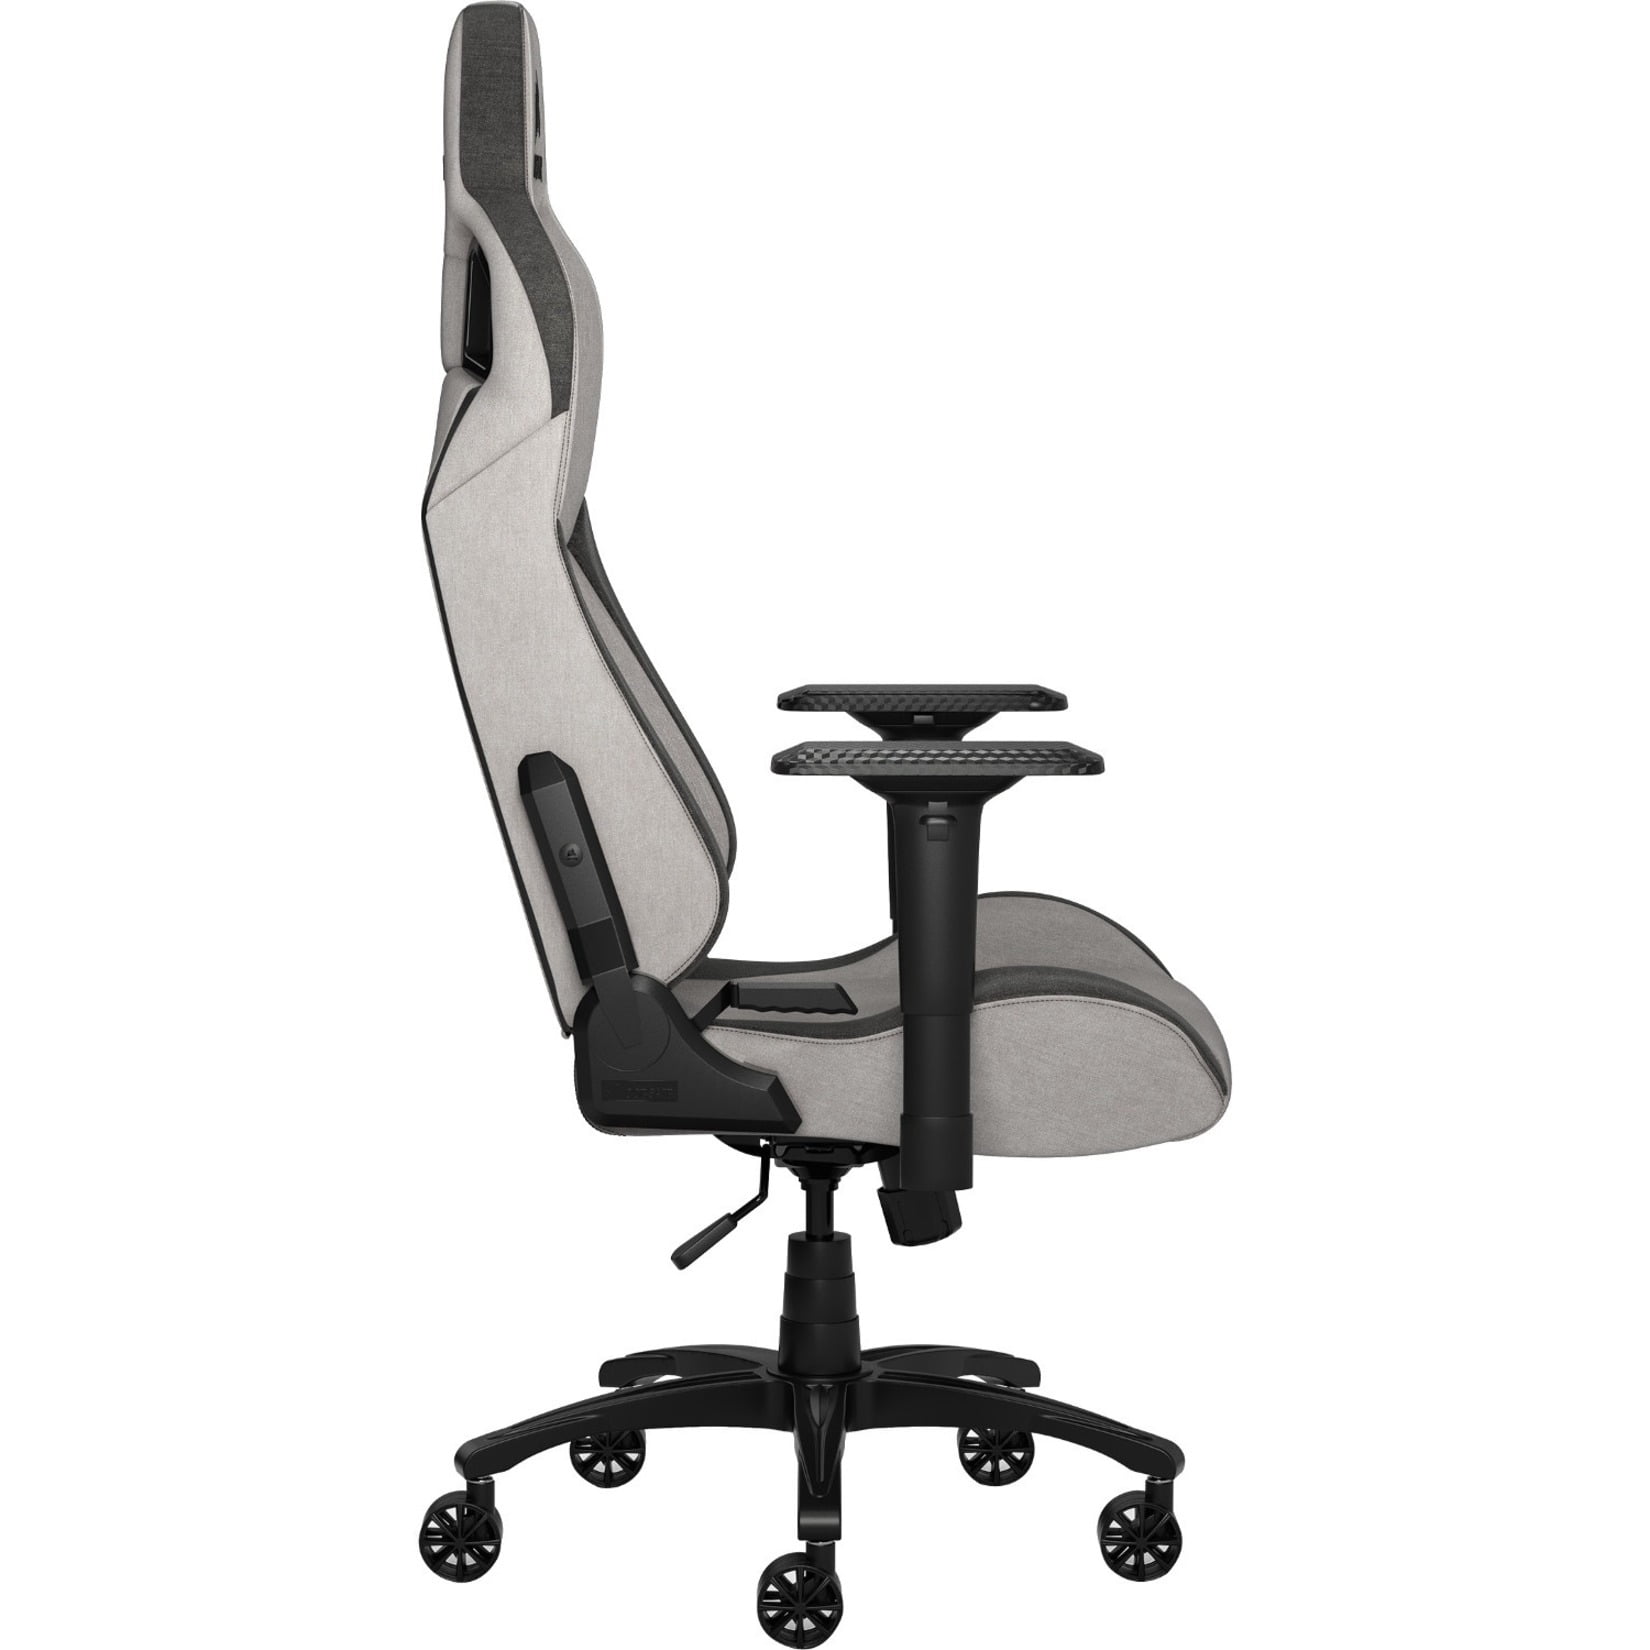 Corsair T3 RUSH Fabric Gaming Chair (Grey/Charcoal)